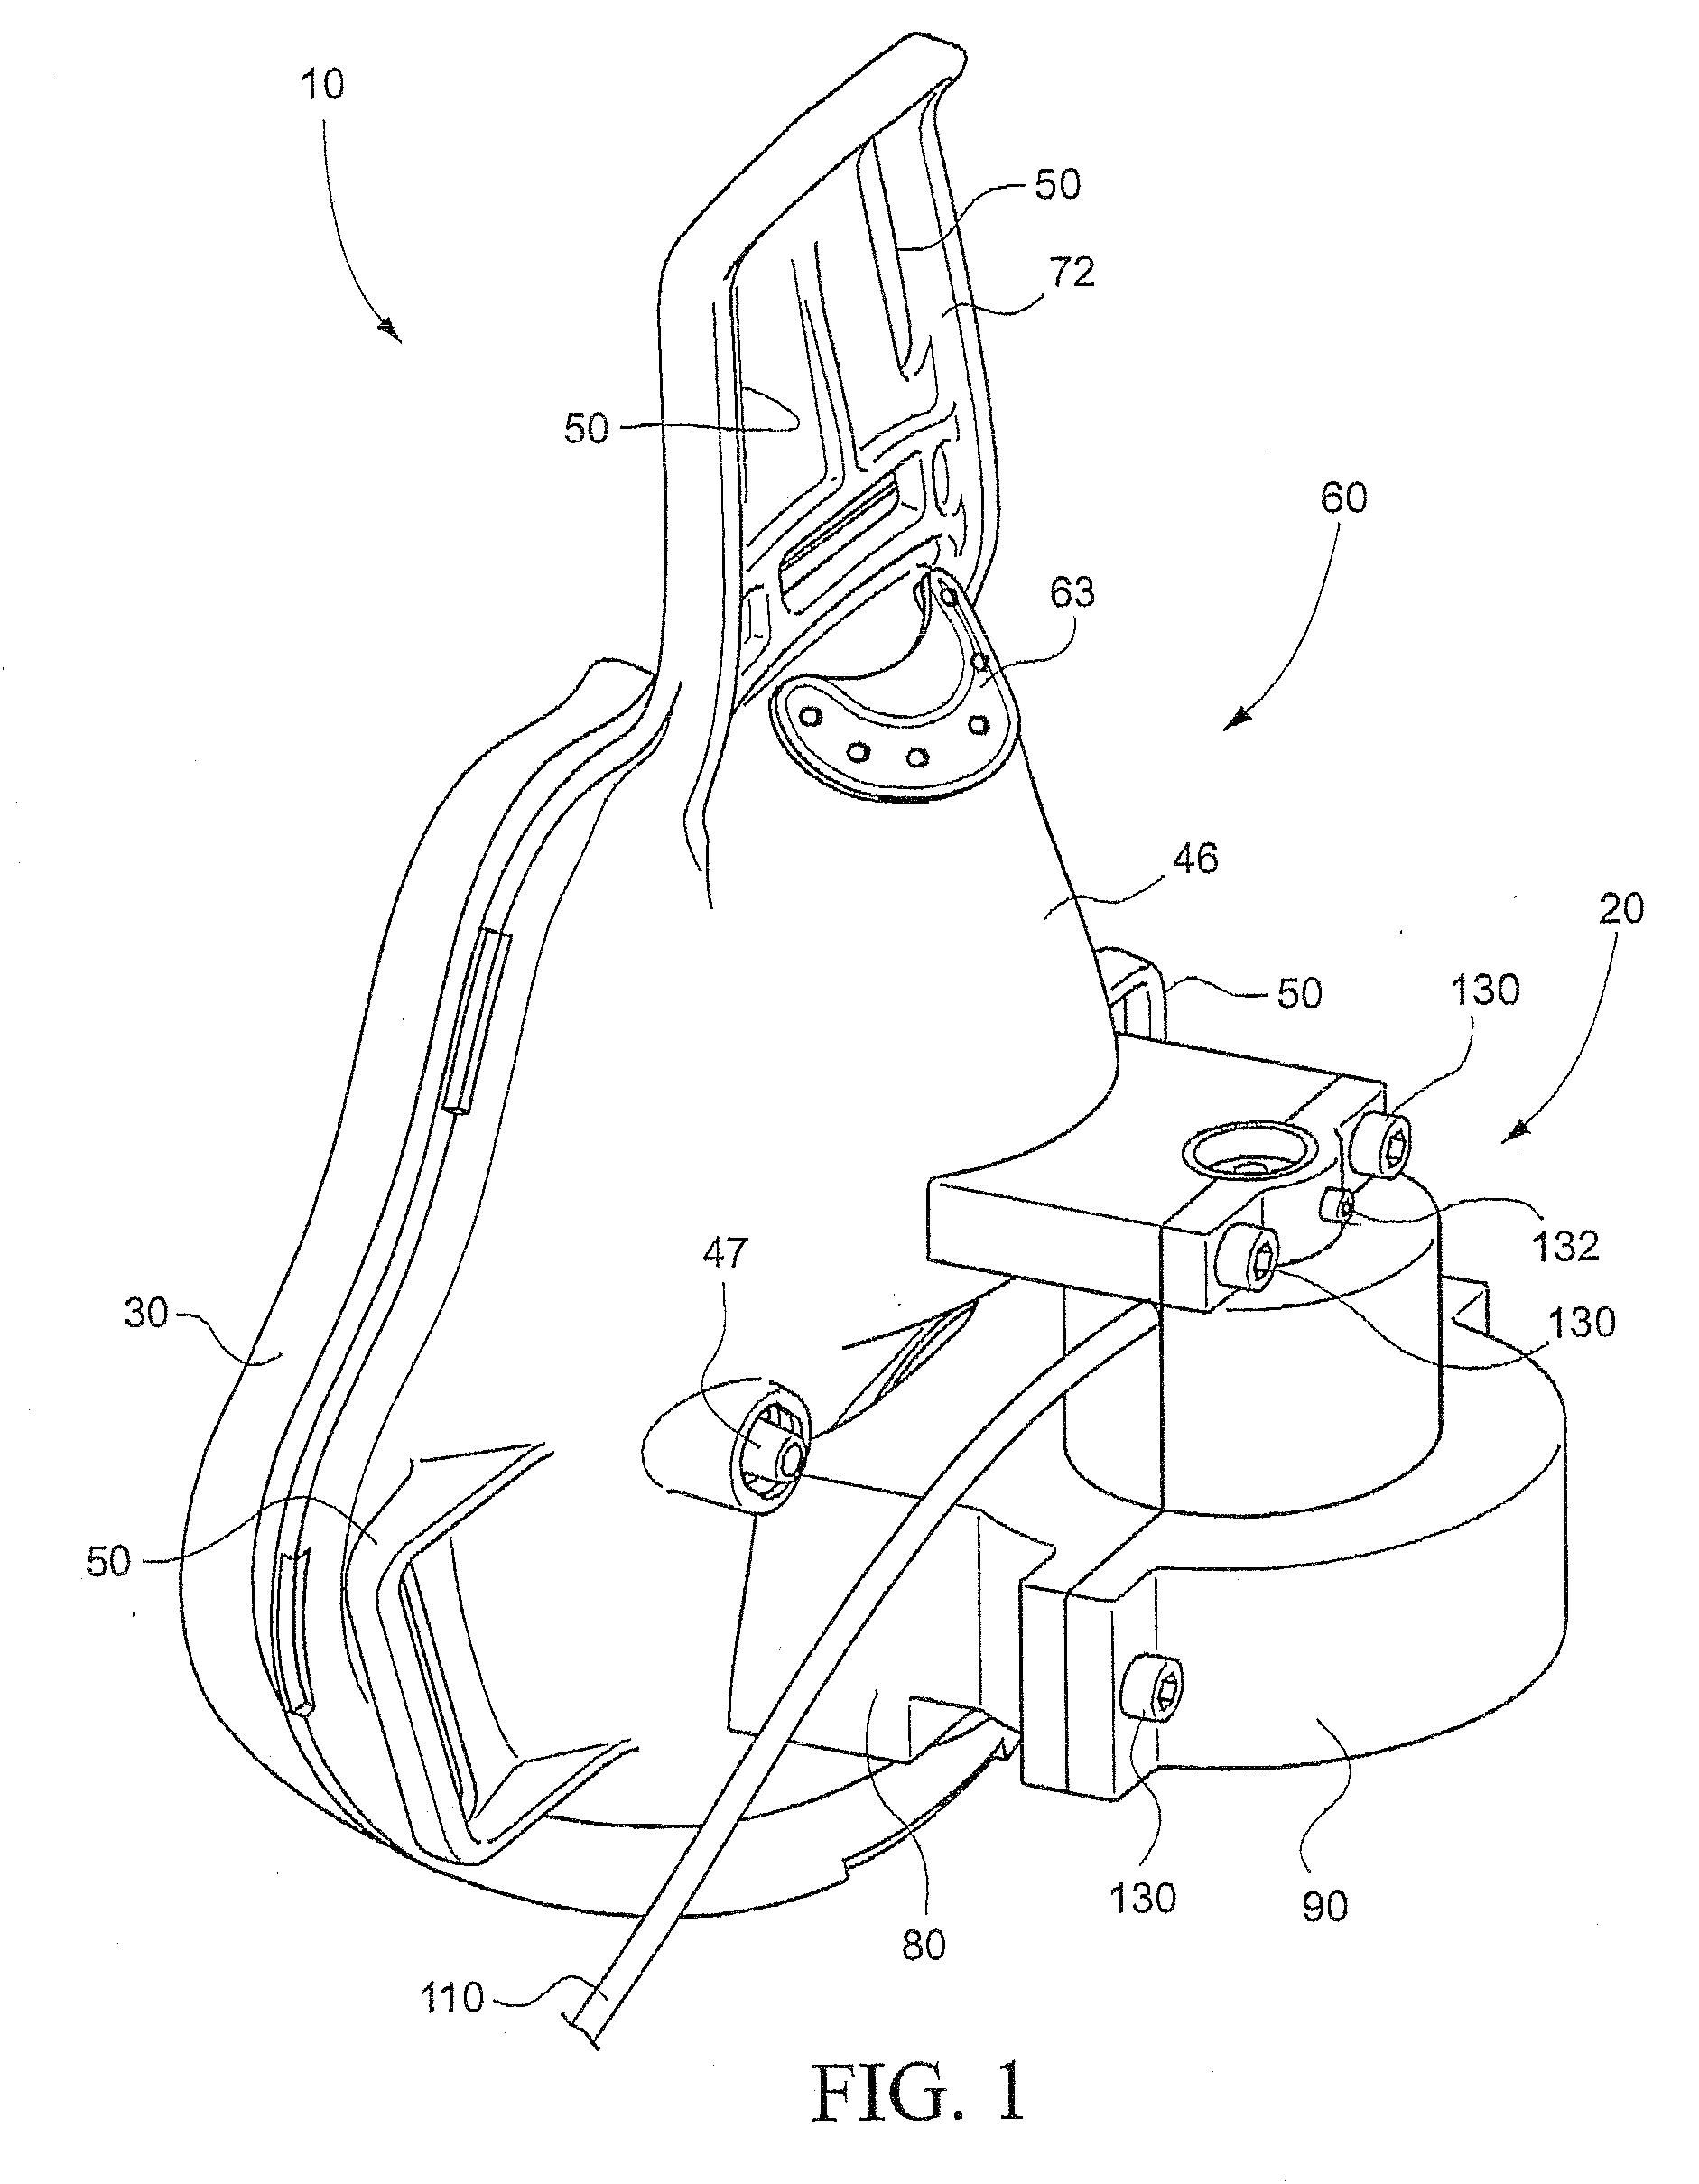 Ventilator mask and system